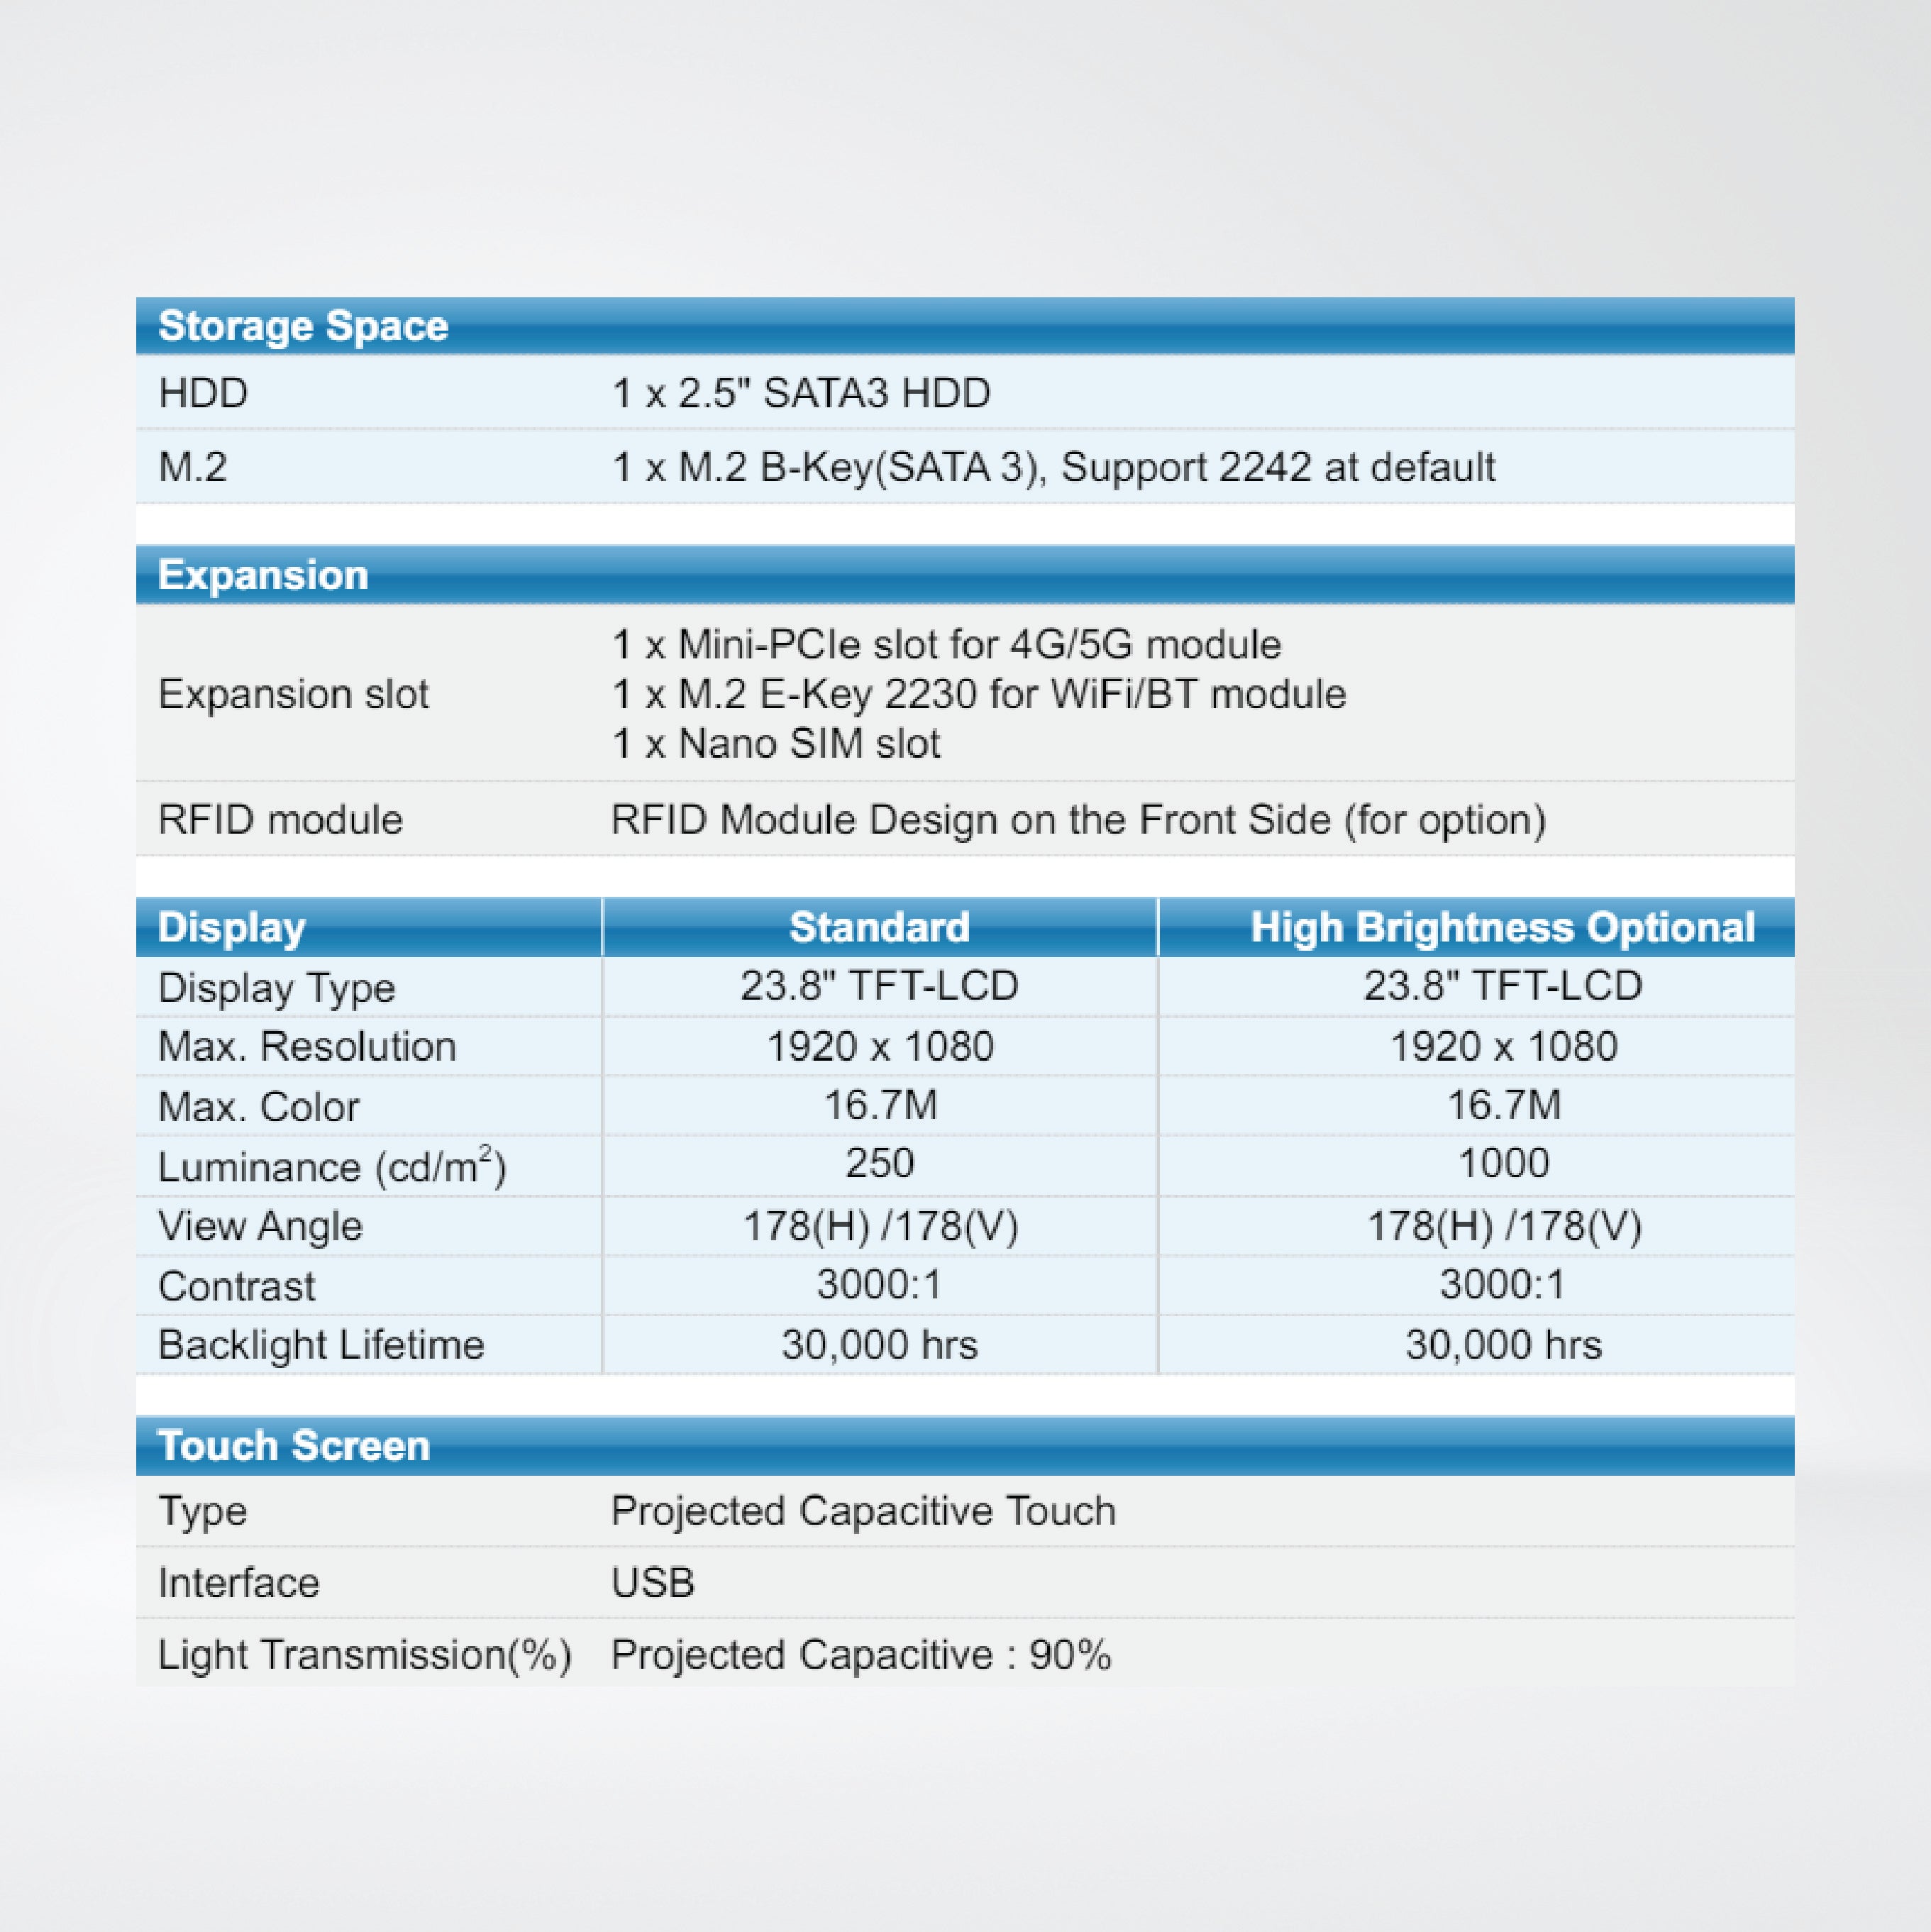 ViTAM-824B 23.8" IP66 / IP69K Stainless Steel Panel PC